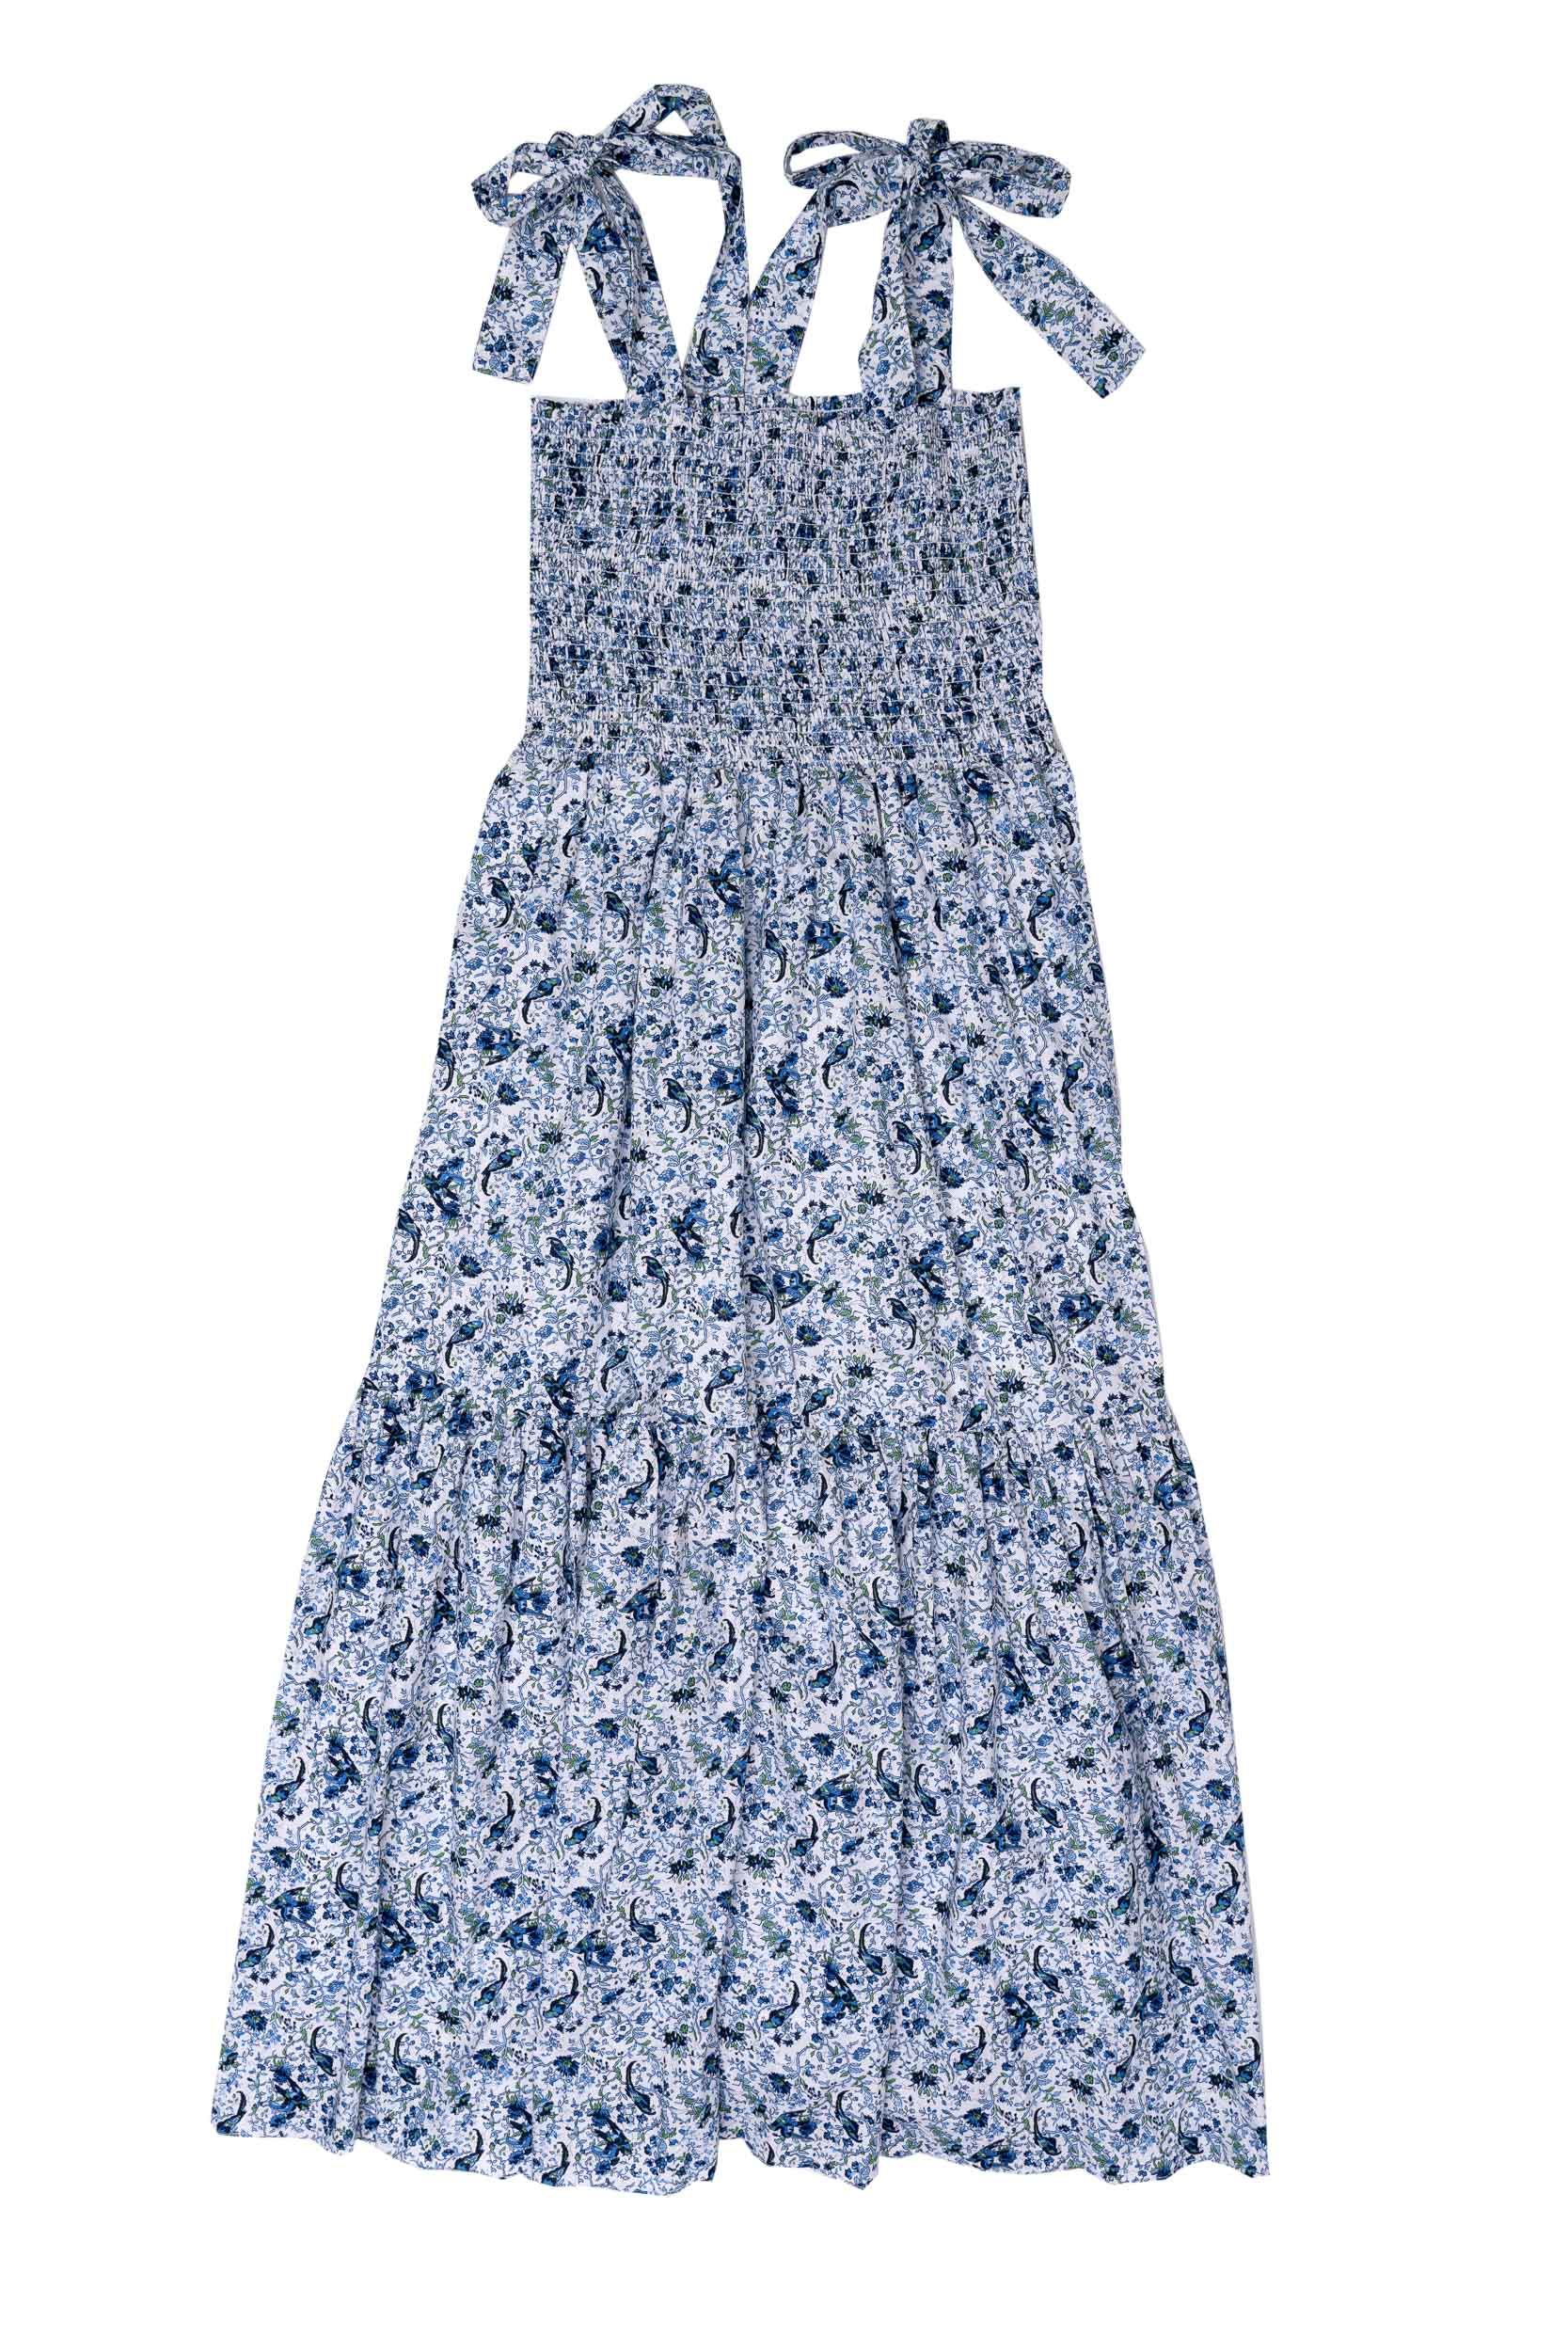 Mom Blue Floral Dress | The Oaks Apparel Company